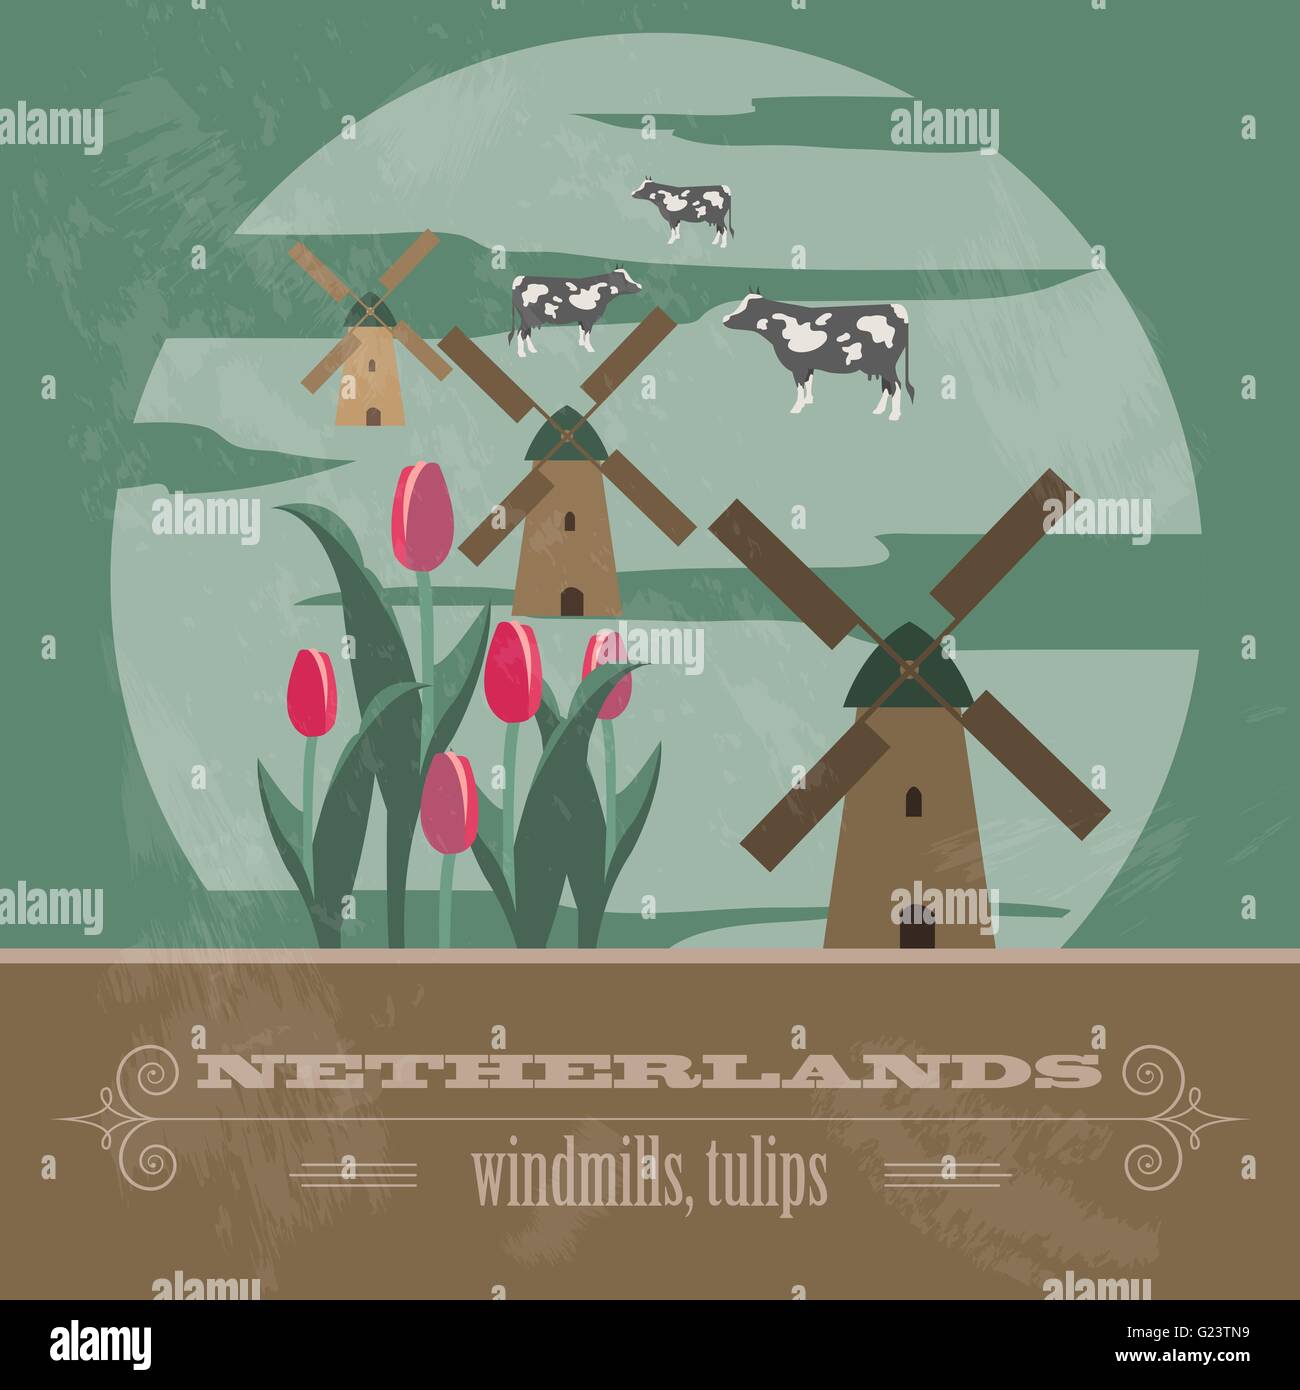 Netherlands landmarks. Retro styled image. Vector illustration Stock Vector